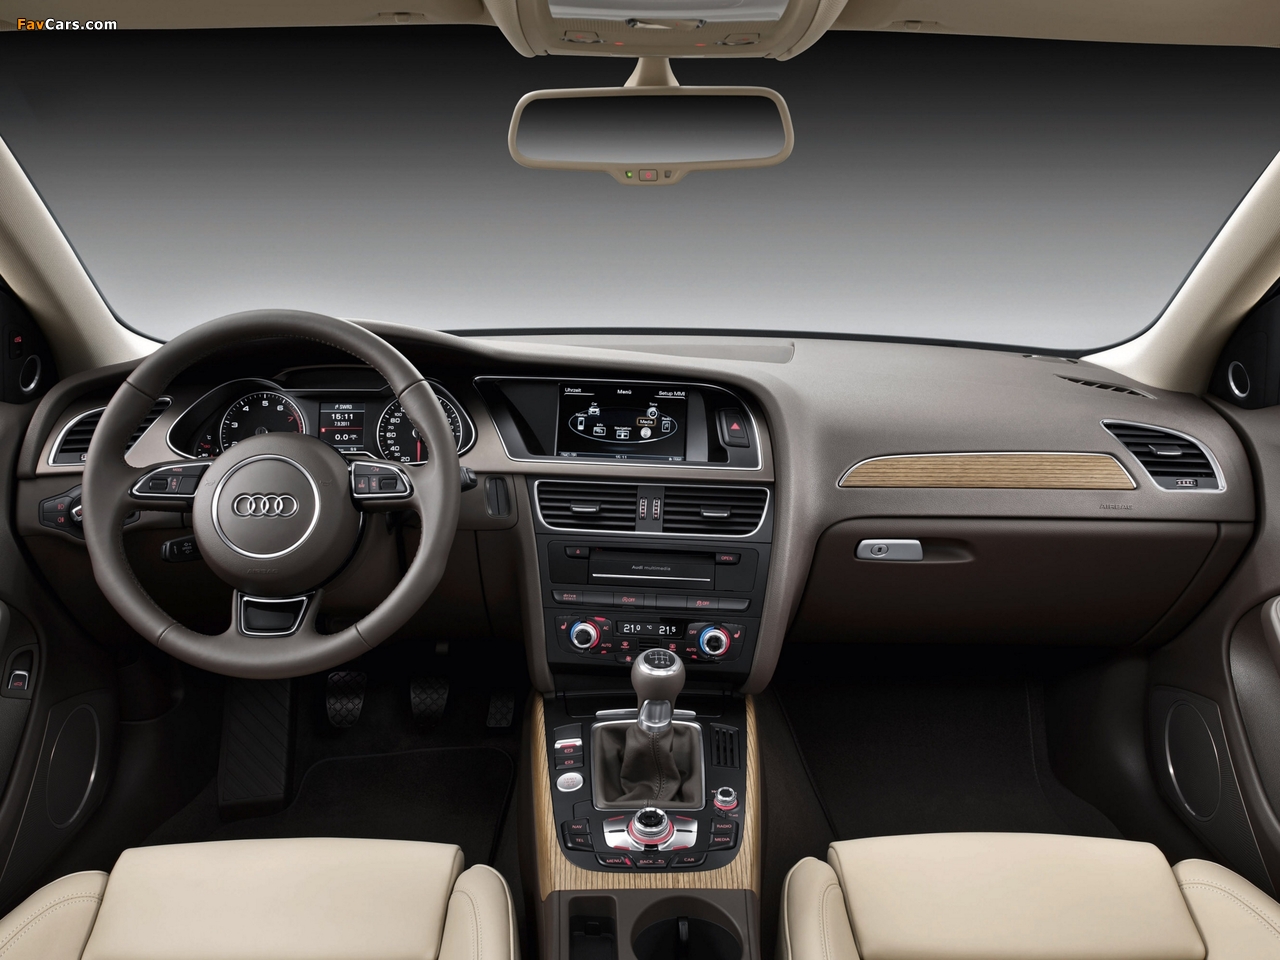 Audi A4 2.0 TFSI Sedan (B8,8K) 2012 pictures (1280 x 960)